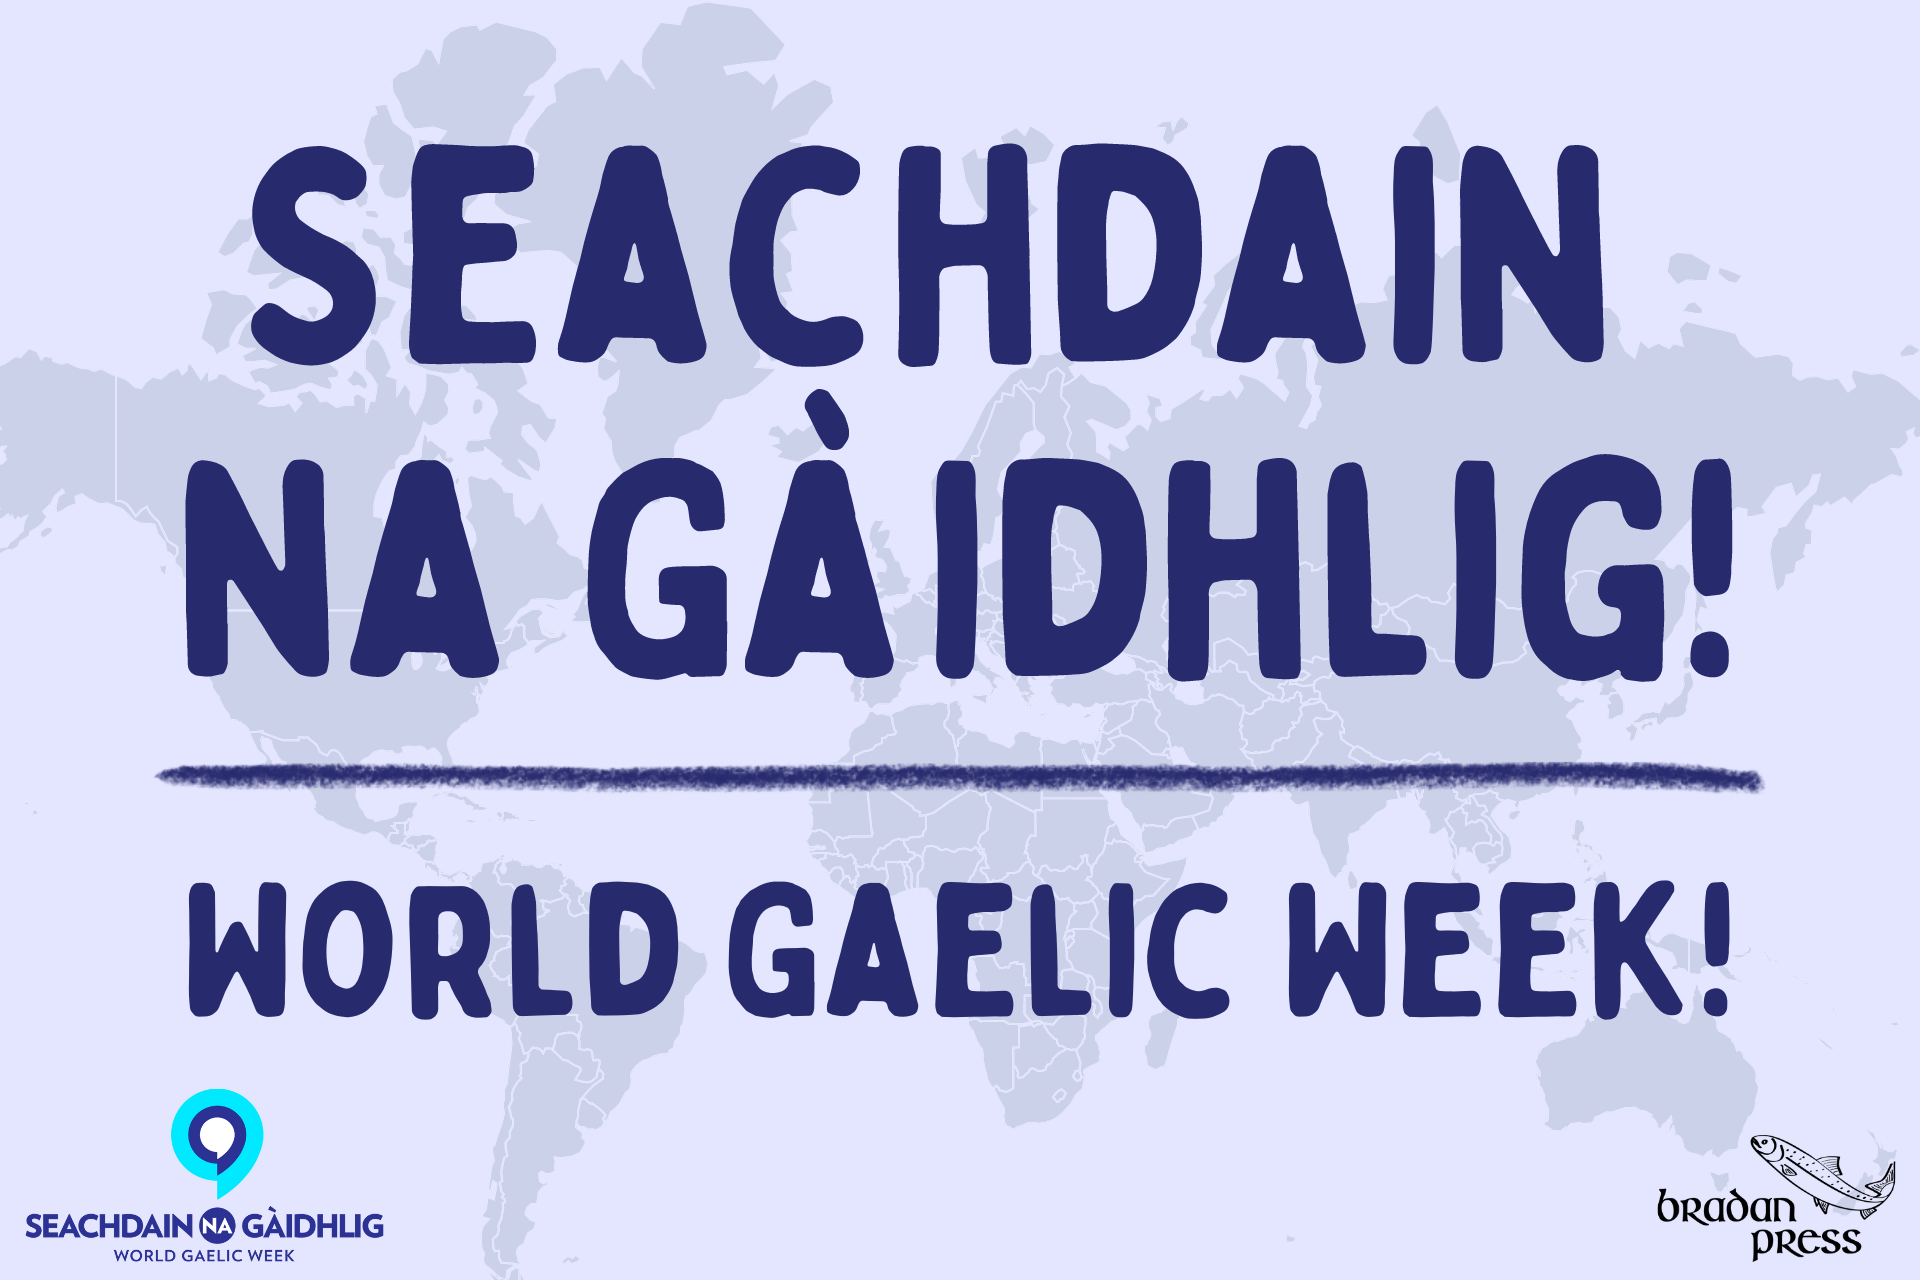 Happy World Gaelic Week